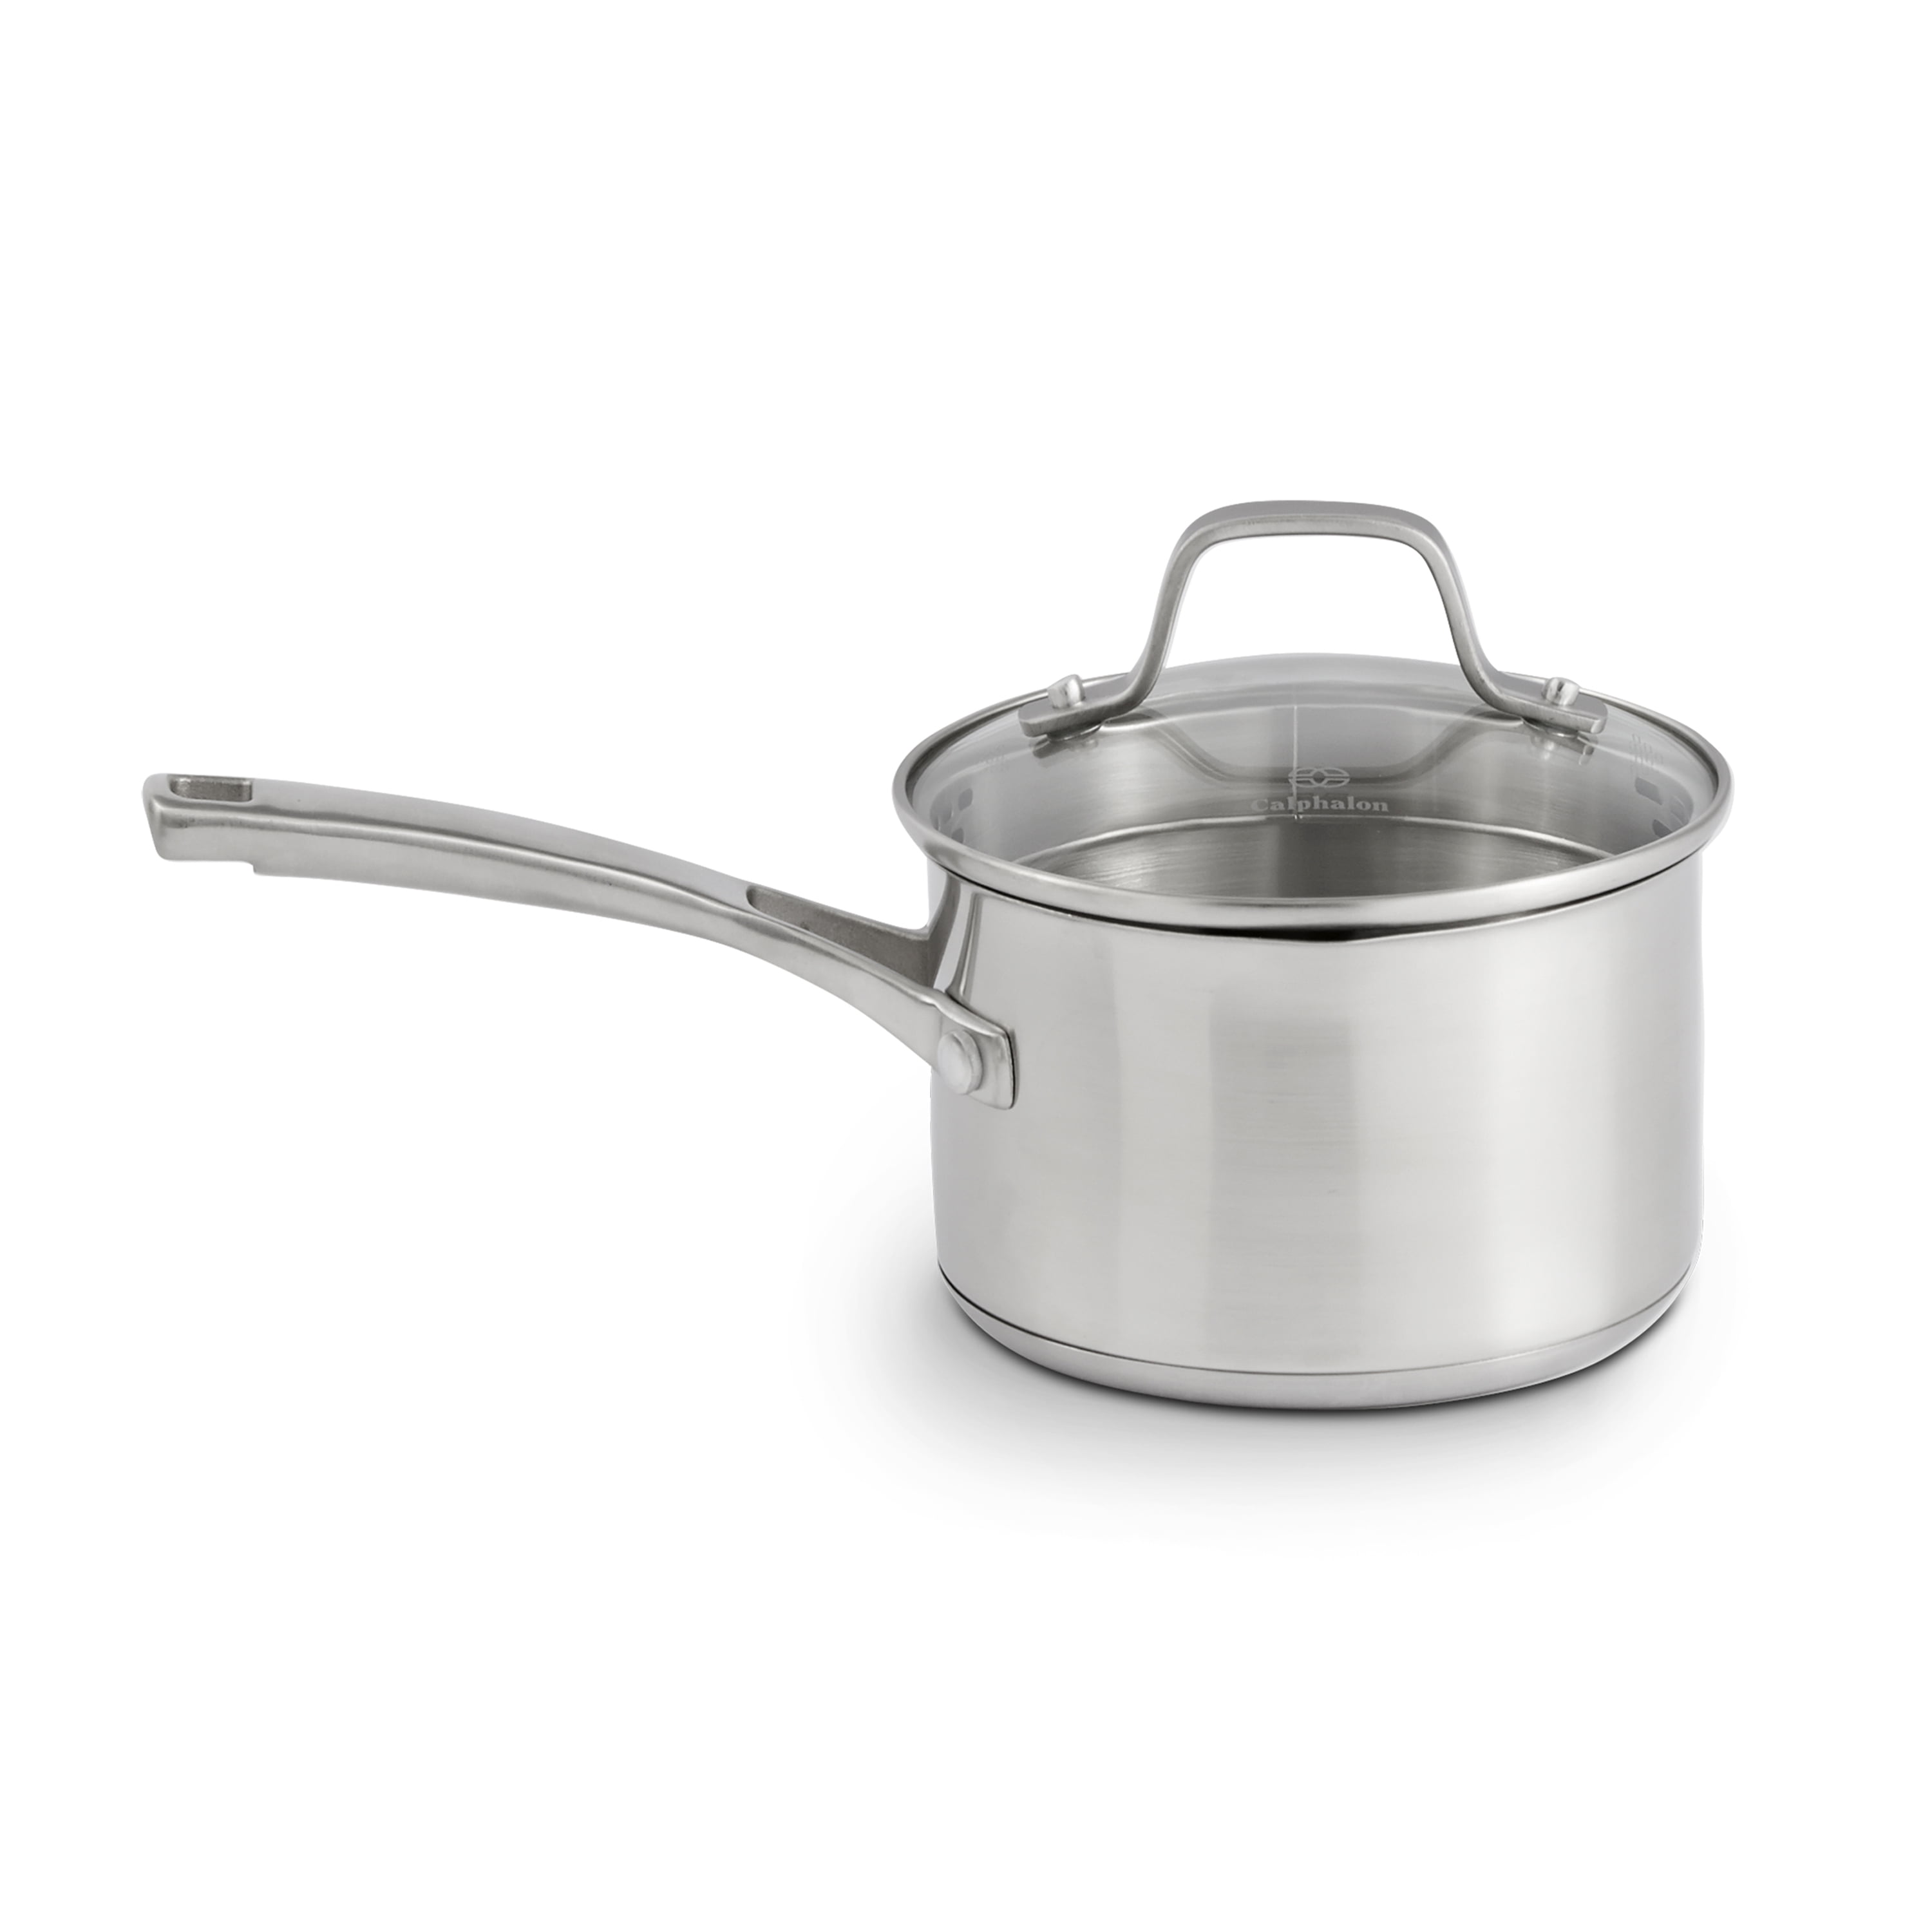 Calphalon Classic Stainless Steel Cookware, Sauce Pan, 1 1.5 Quart, Silver